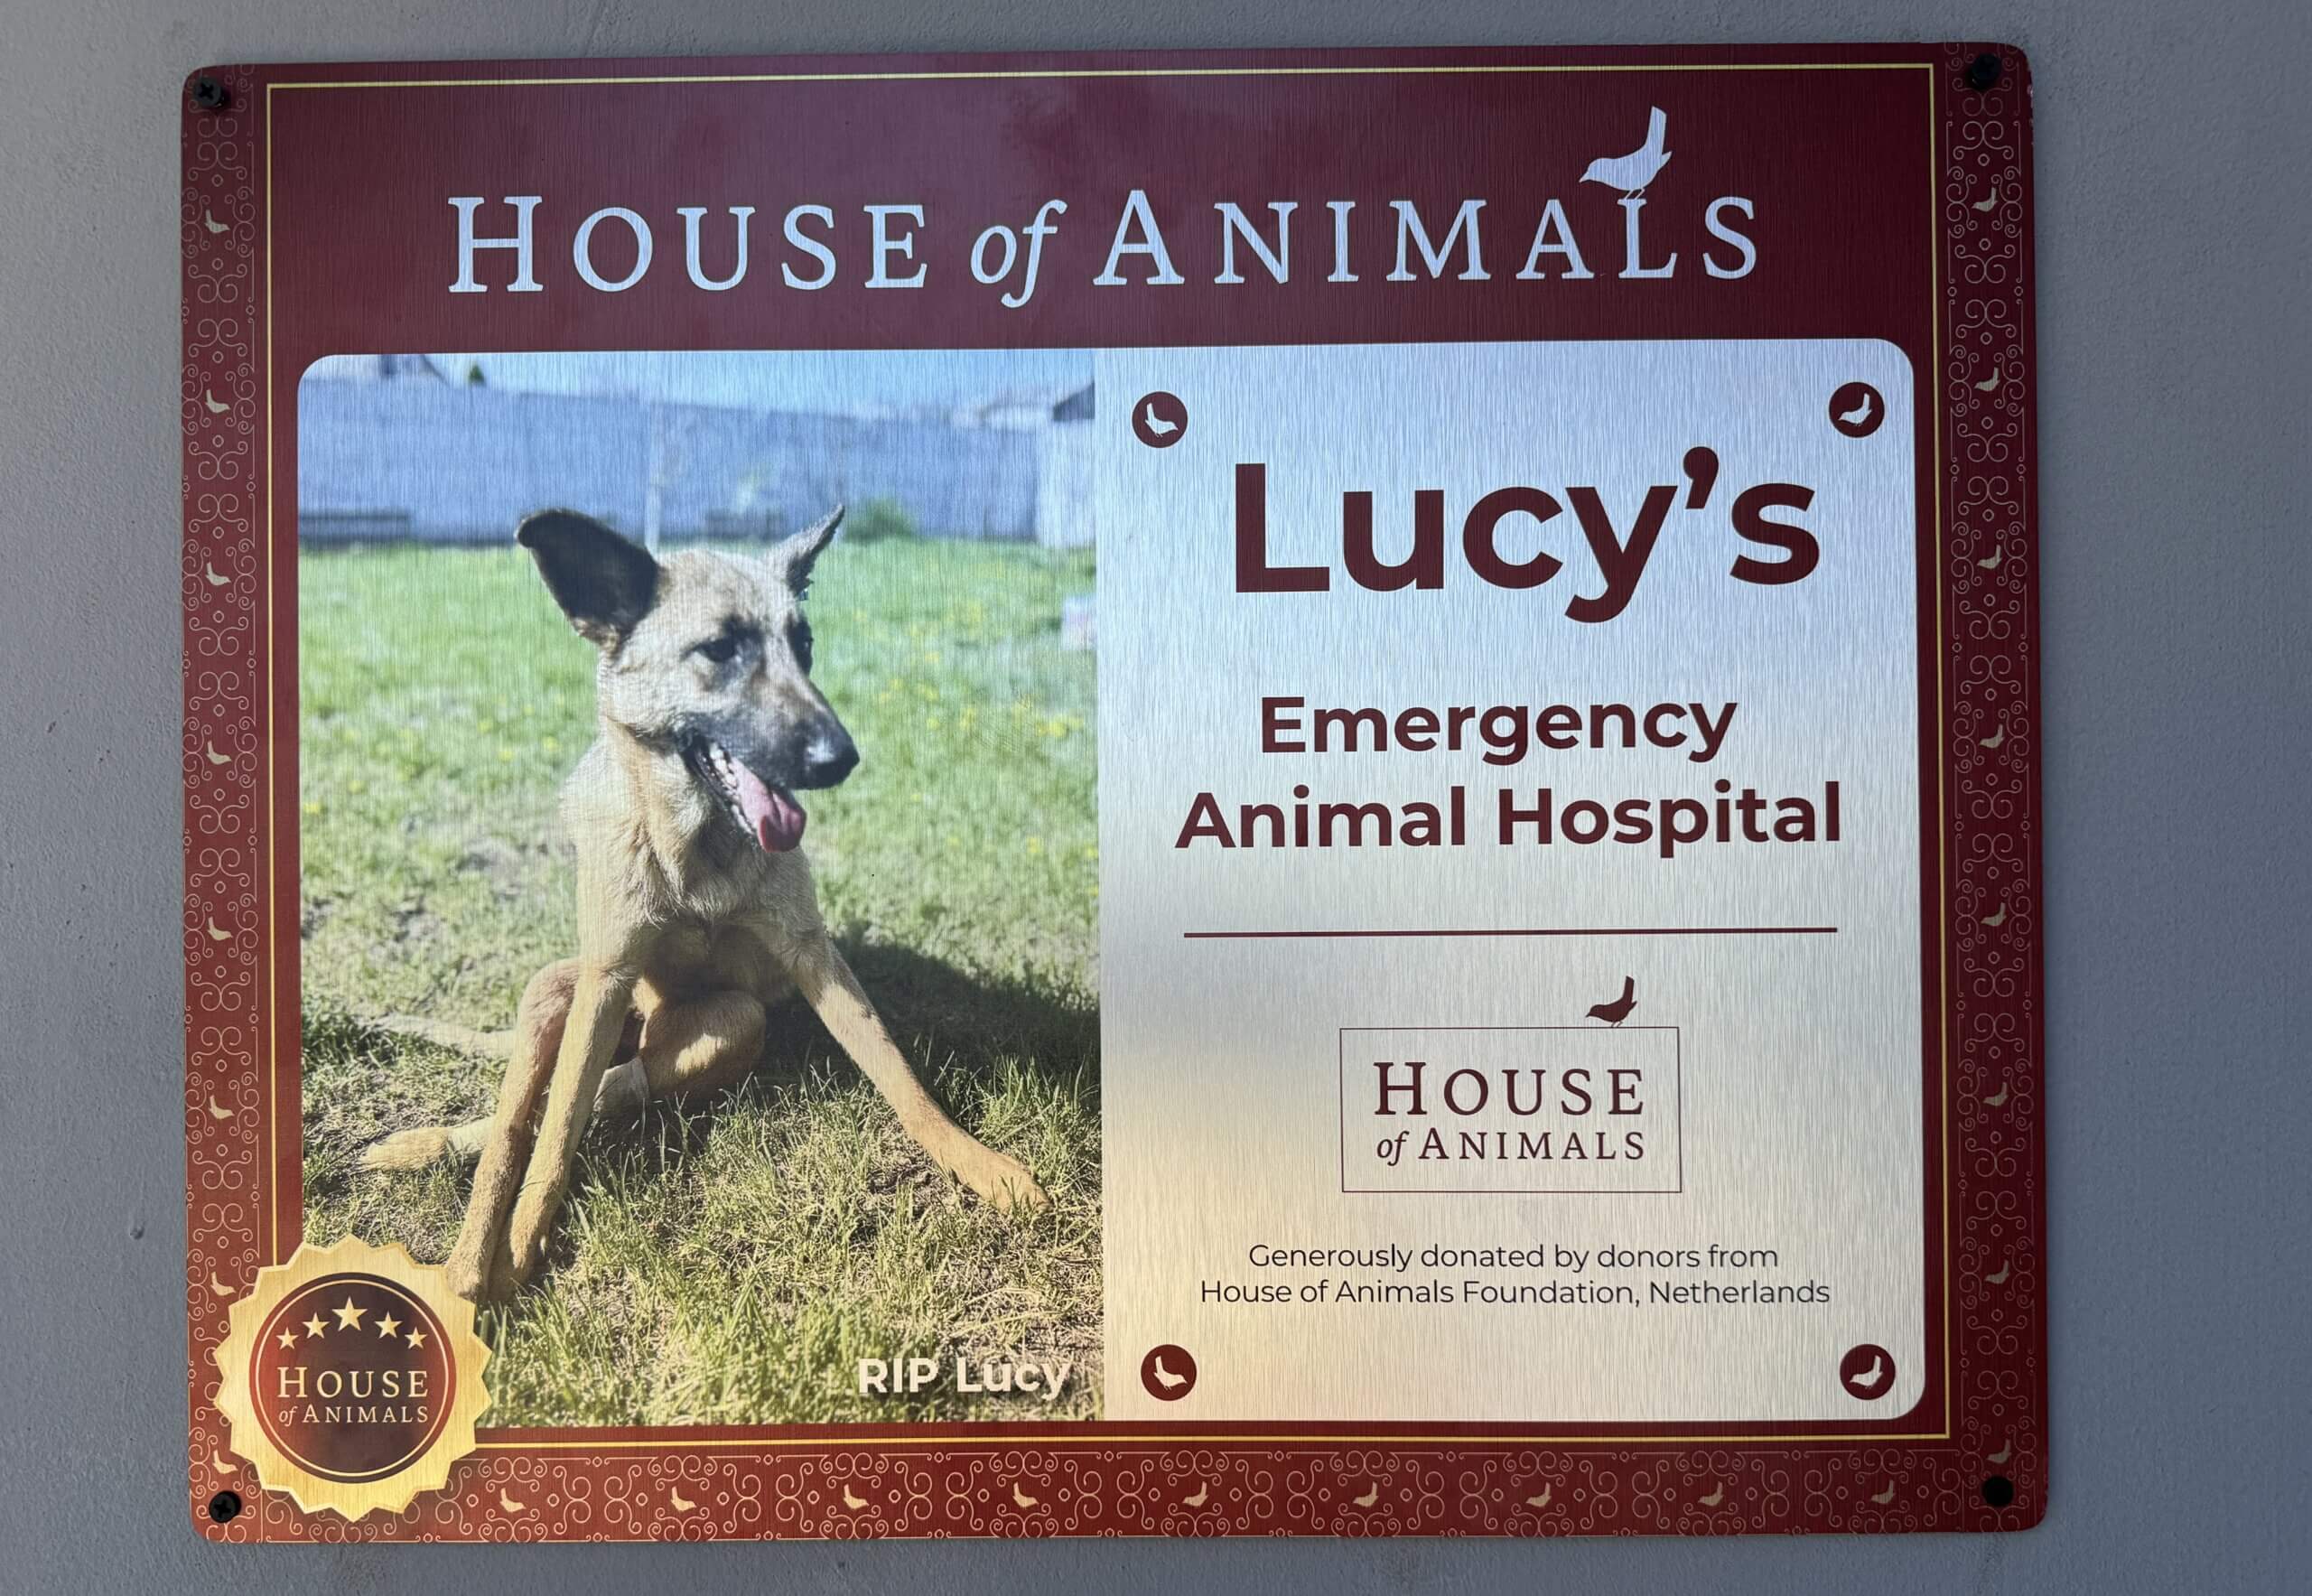 Lucy's Emergency Animal Hospital Baken van hoop in oorlogstijd